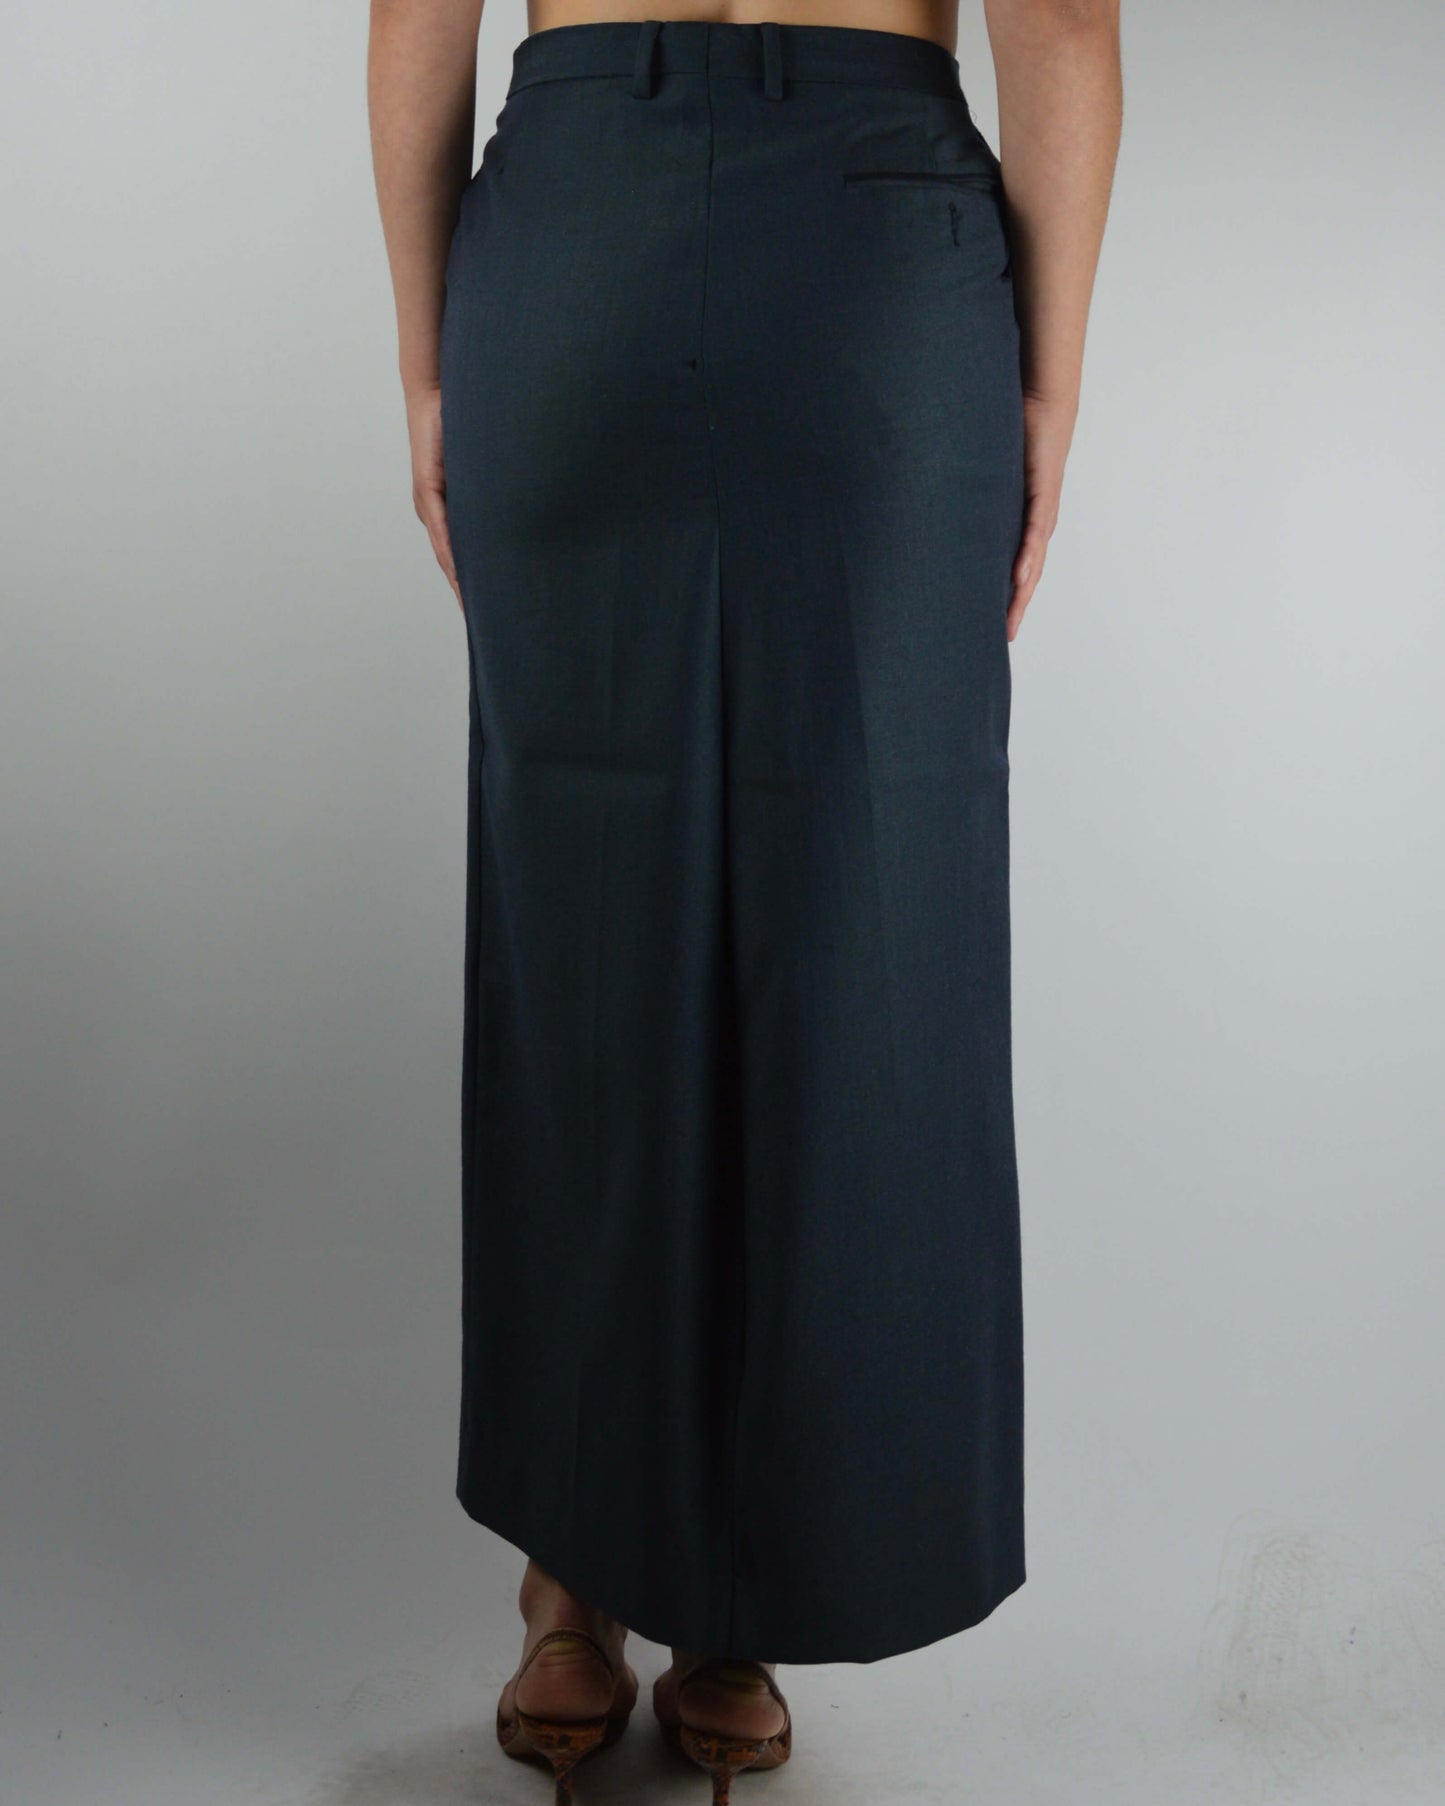 Long Skirt - Seawater Blue (XS/S)